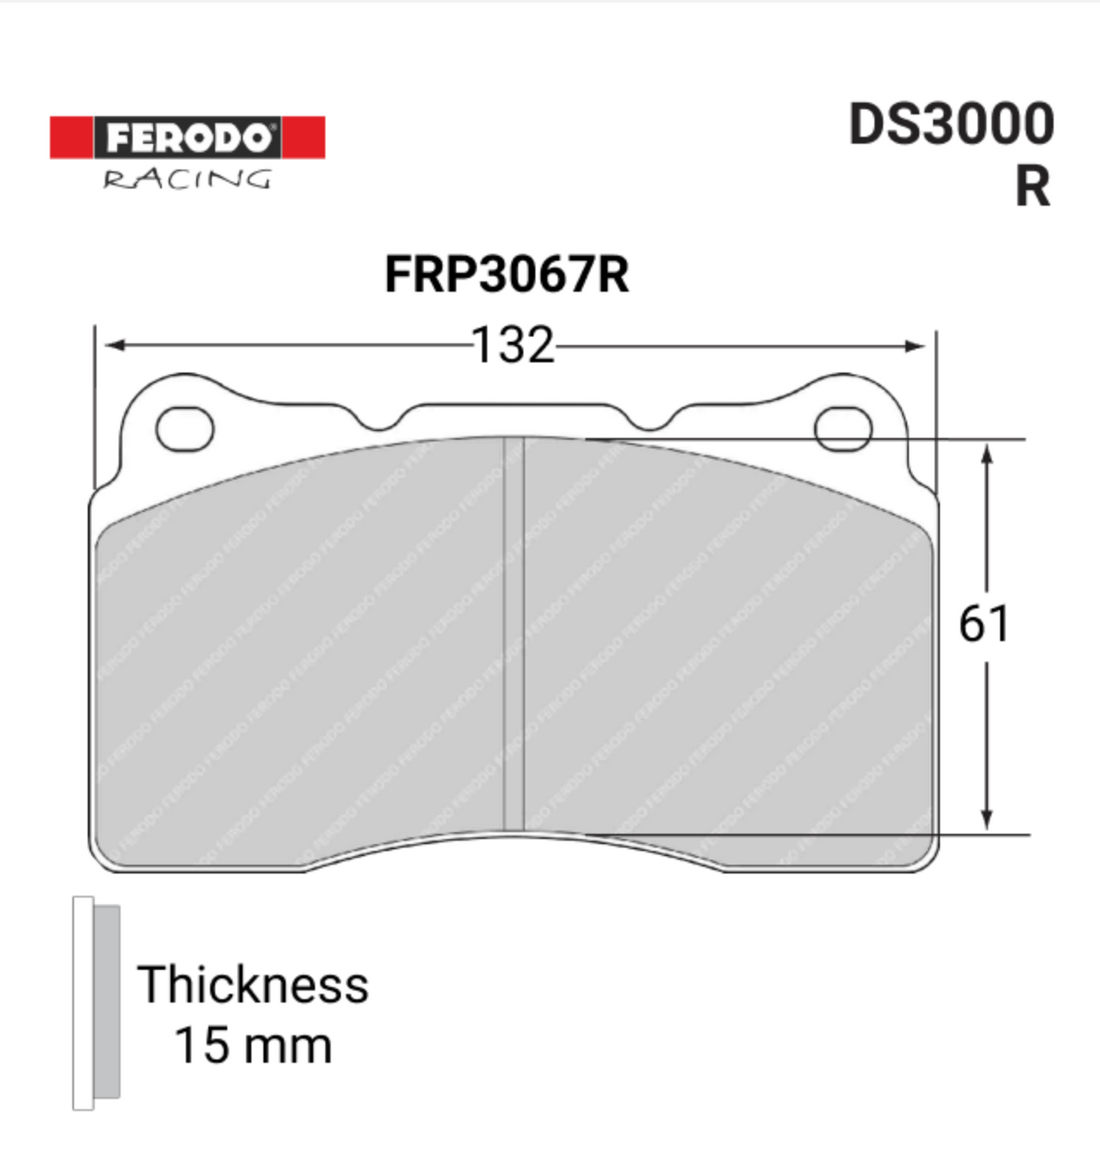 Ferodo FRP3067R DS3000 Brake Pads